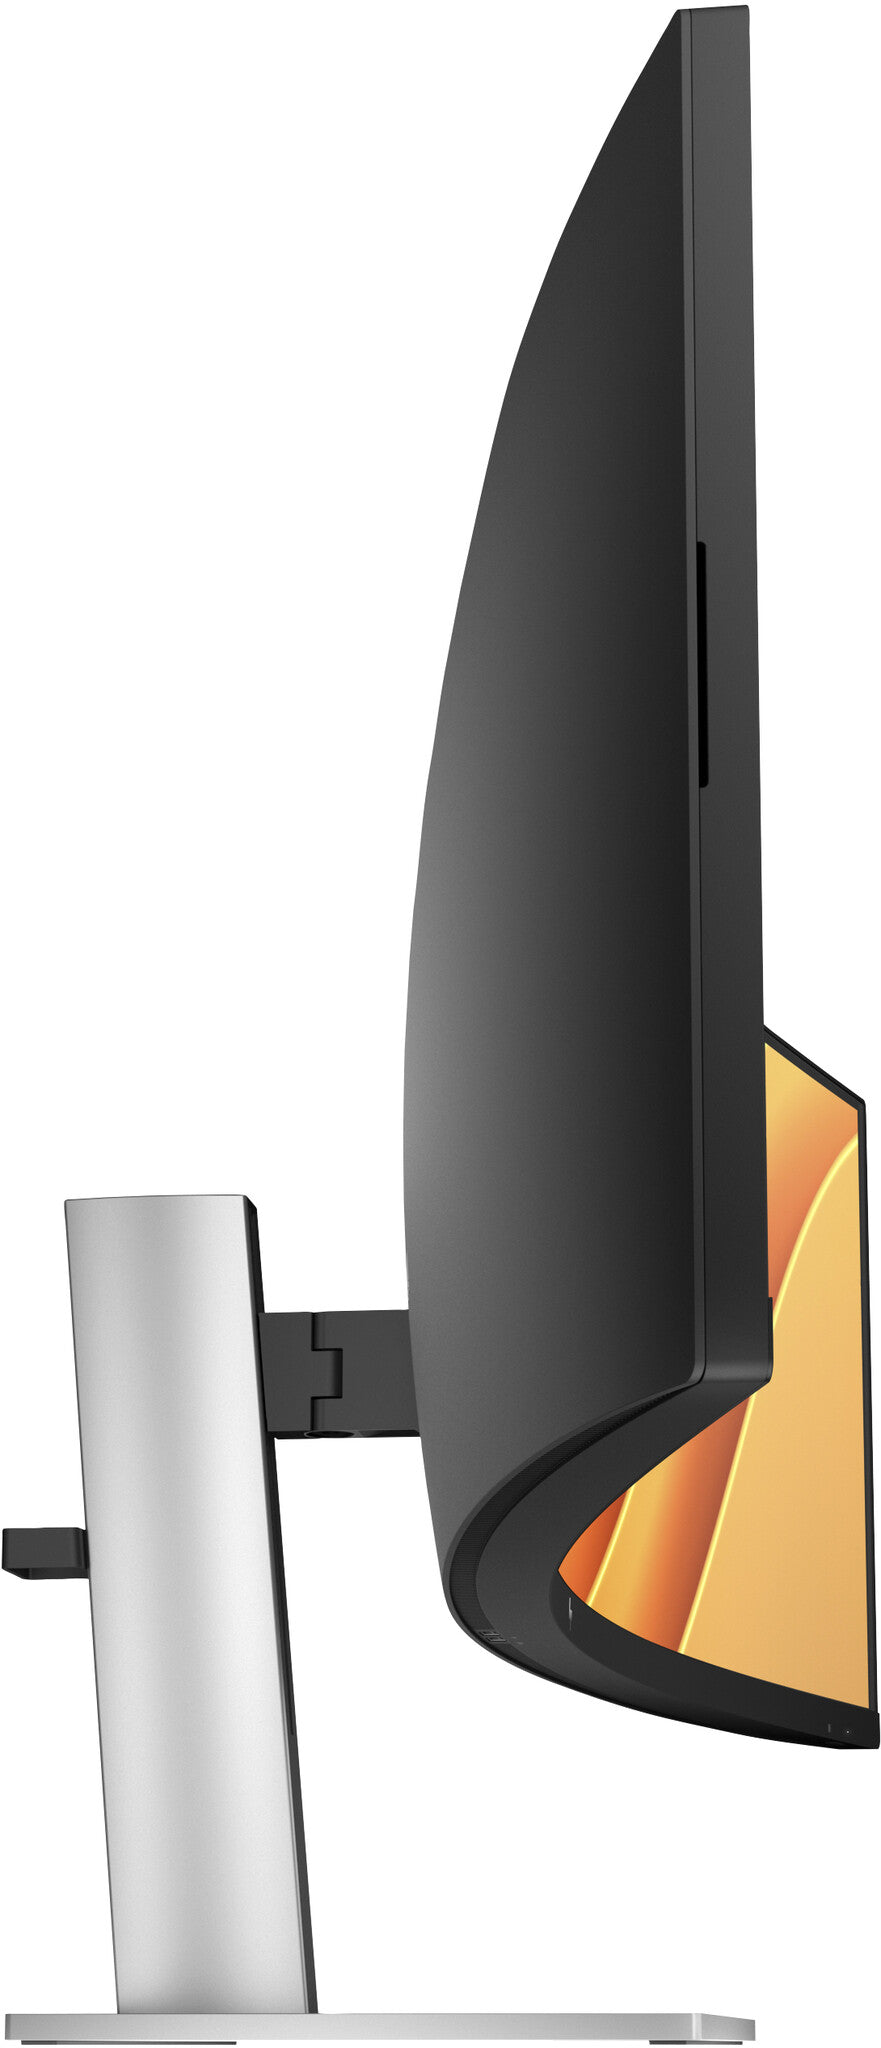 HP E45c G5 - 113 cm (44.5&quot;) - 5120 x 1440 pixels DQHD LCD Monitor